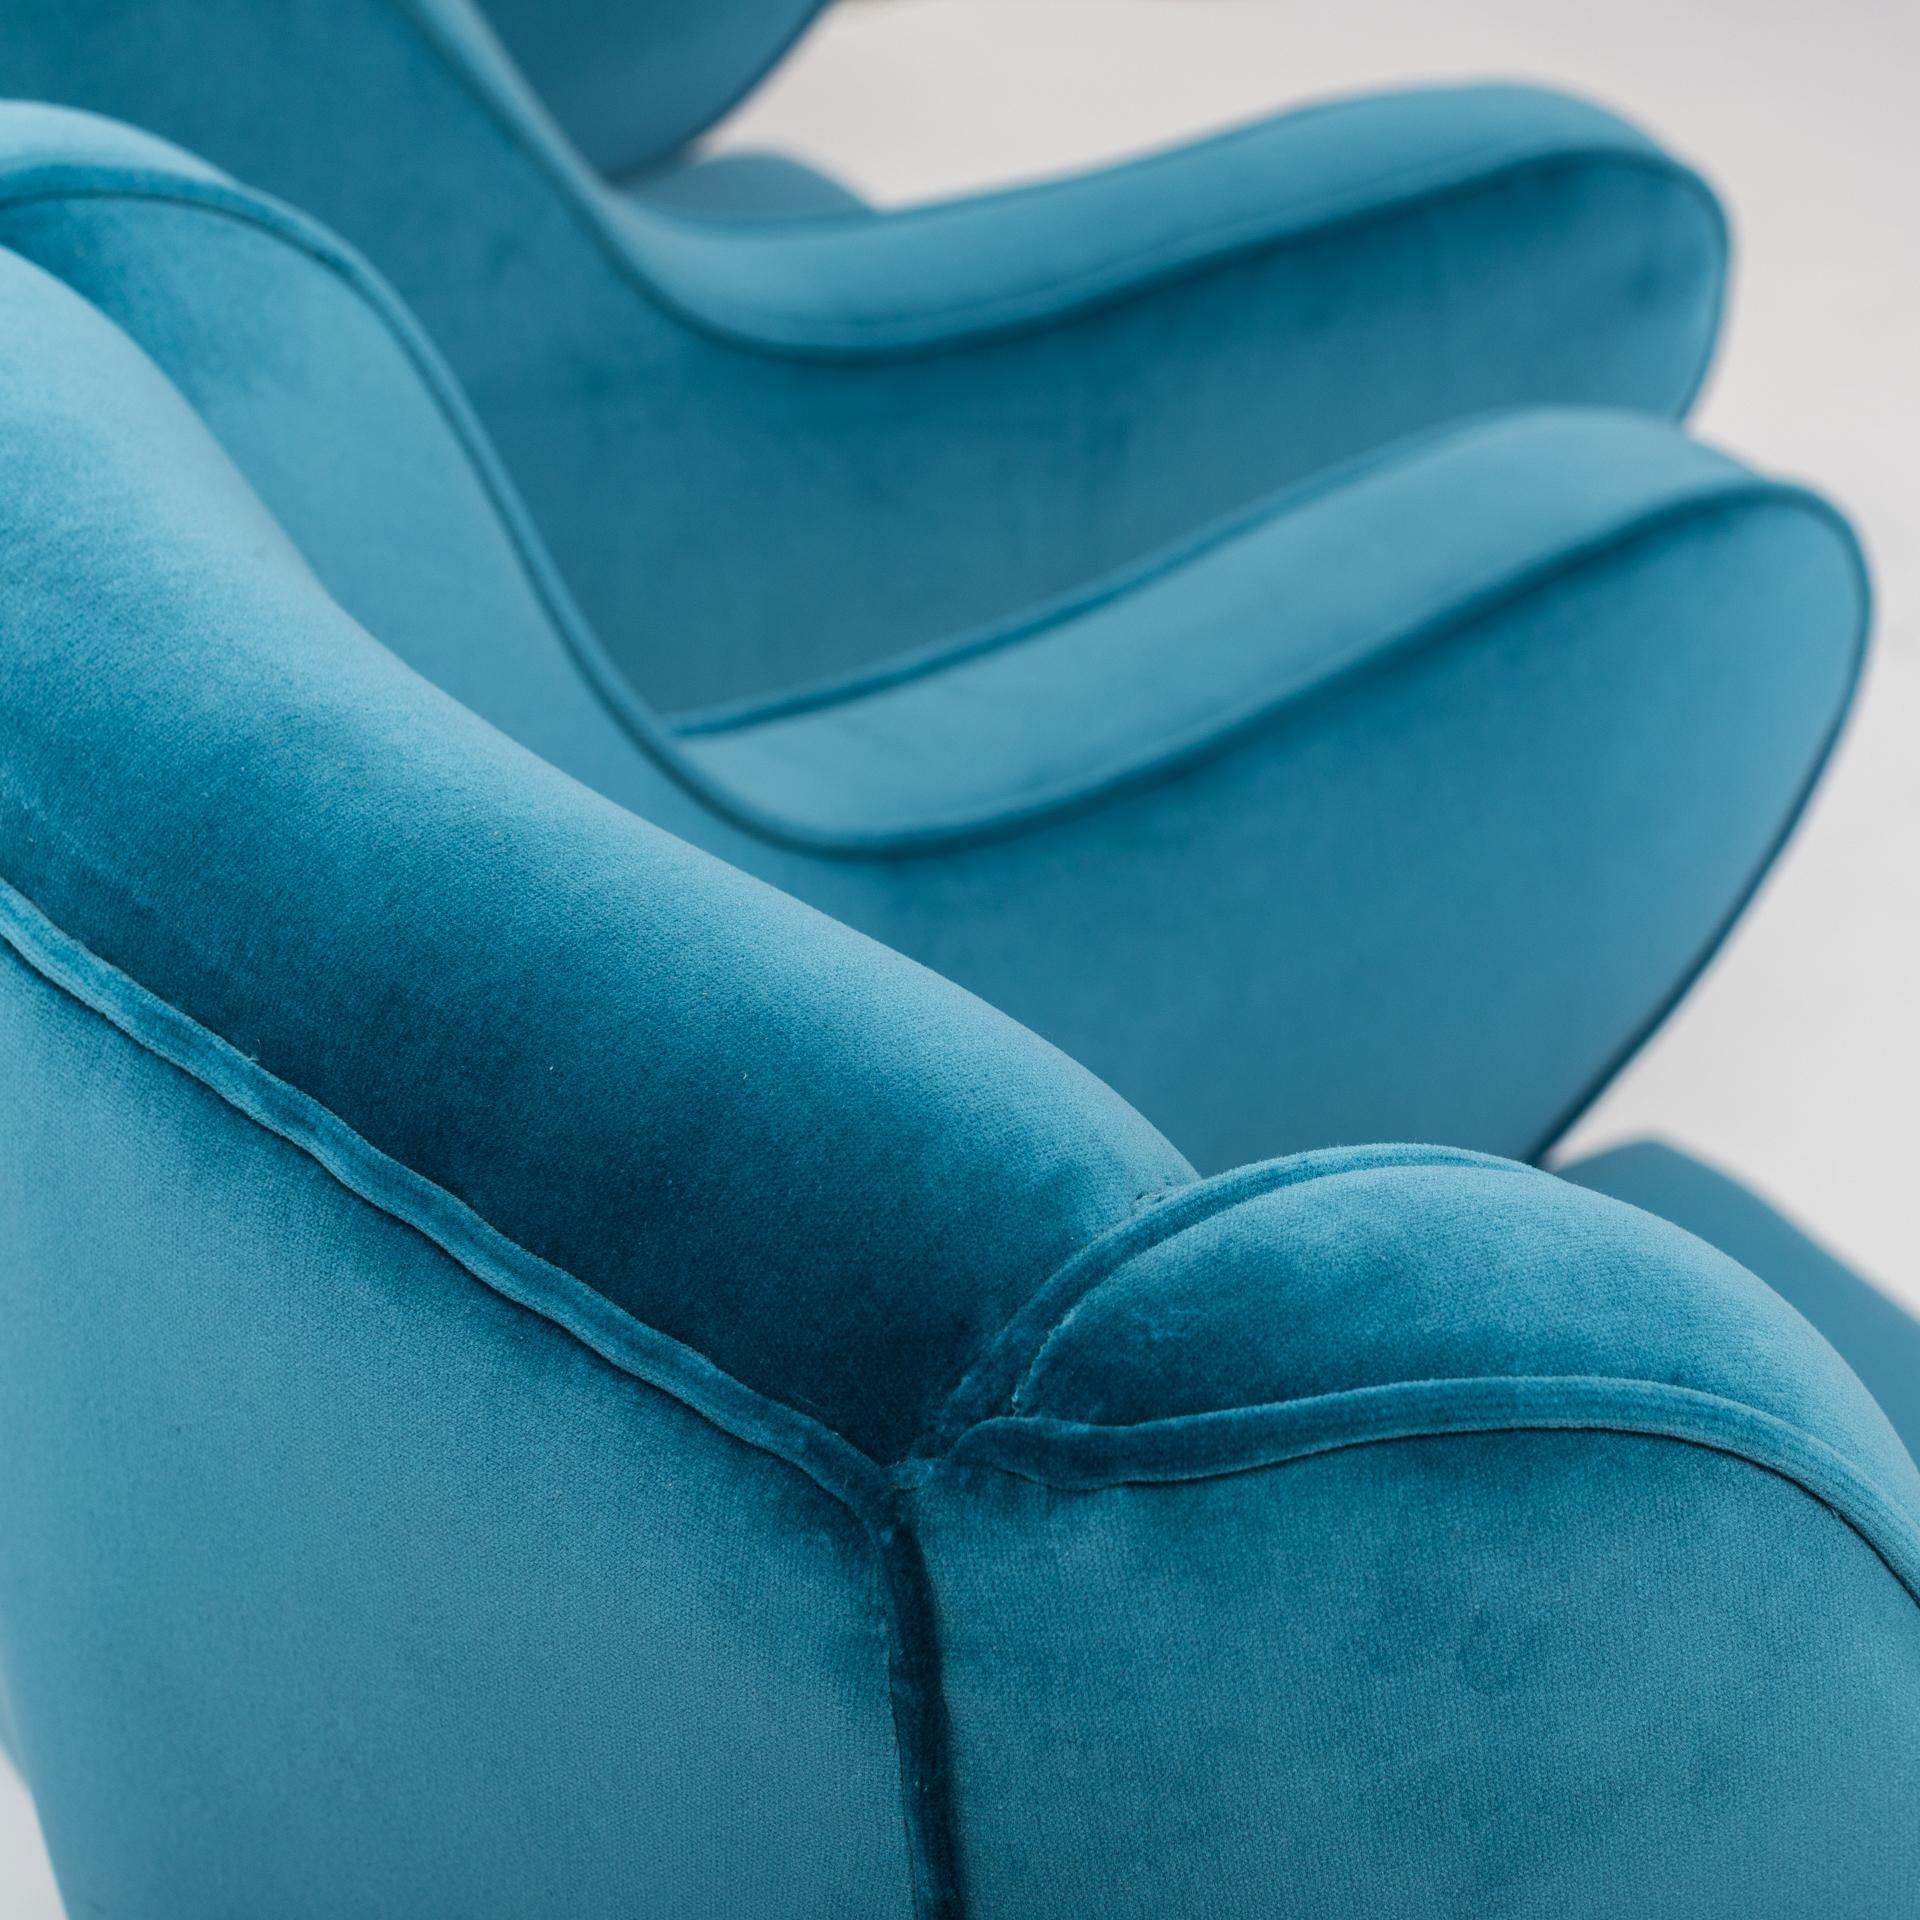 Pair of Italian Midcentury Armchairs Re-Upholsterd in Turquoise Colored Velvet 2